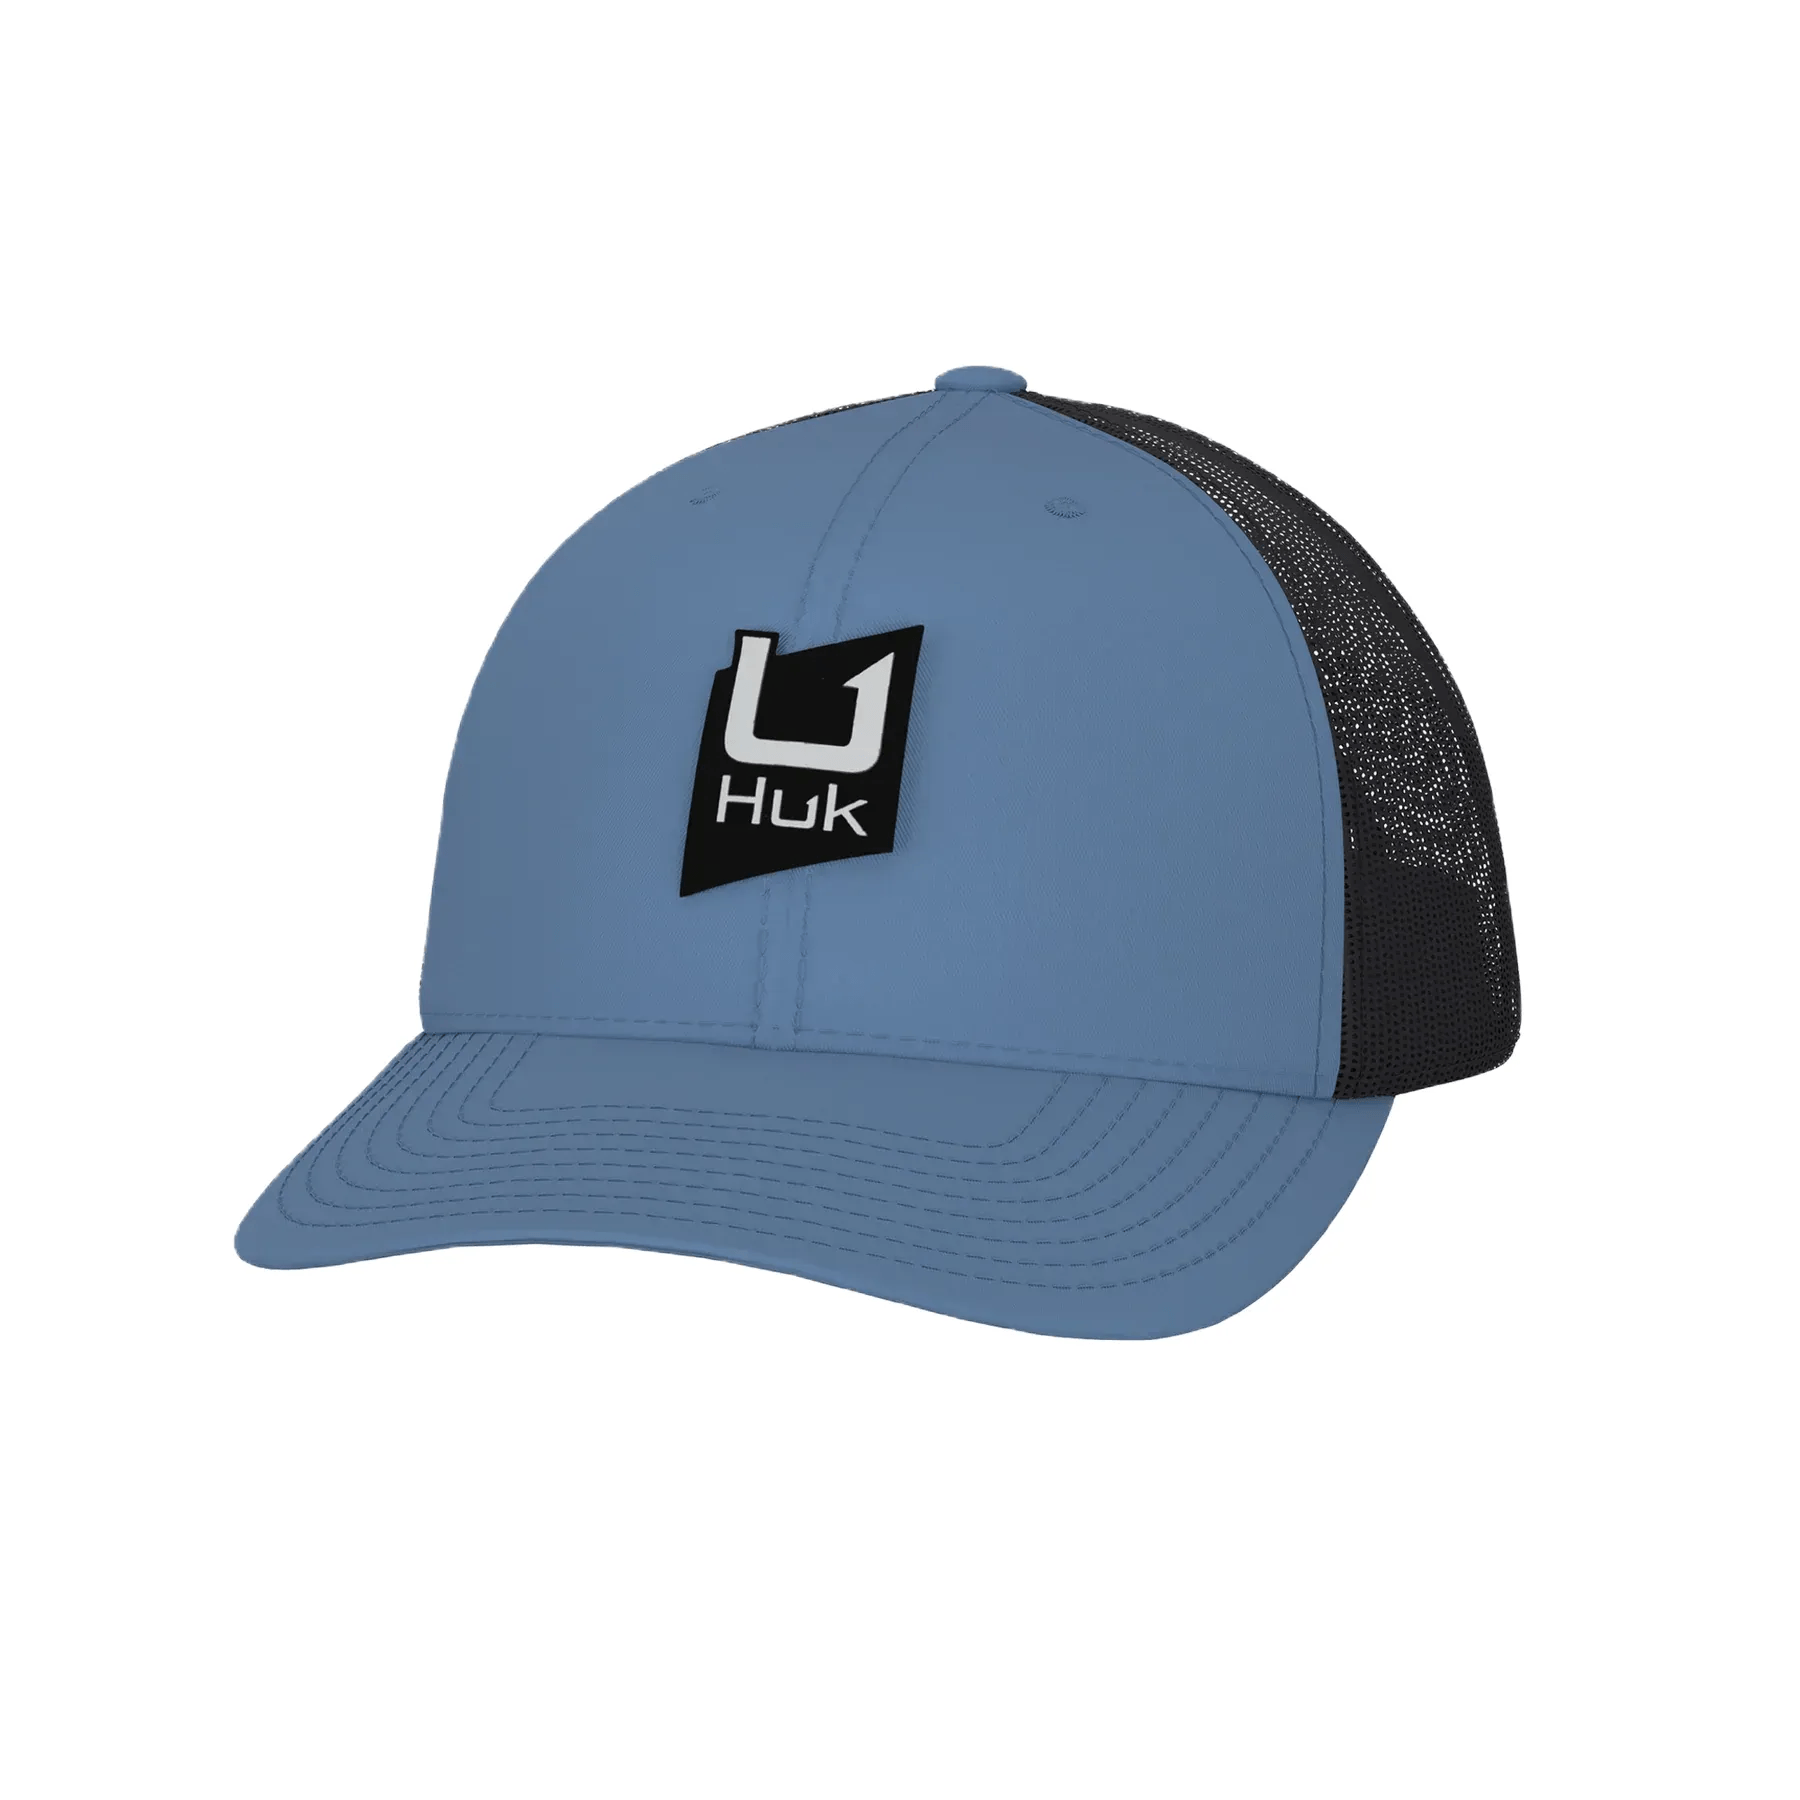 Huk Solid Trucker Hats - Melton Tackle